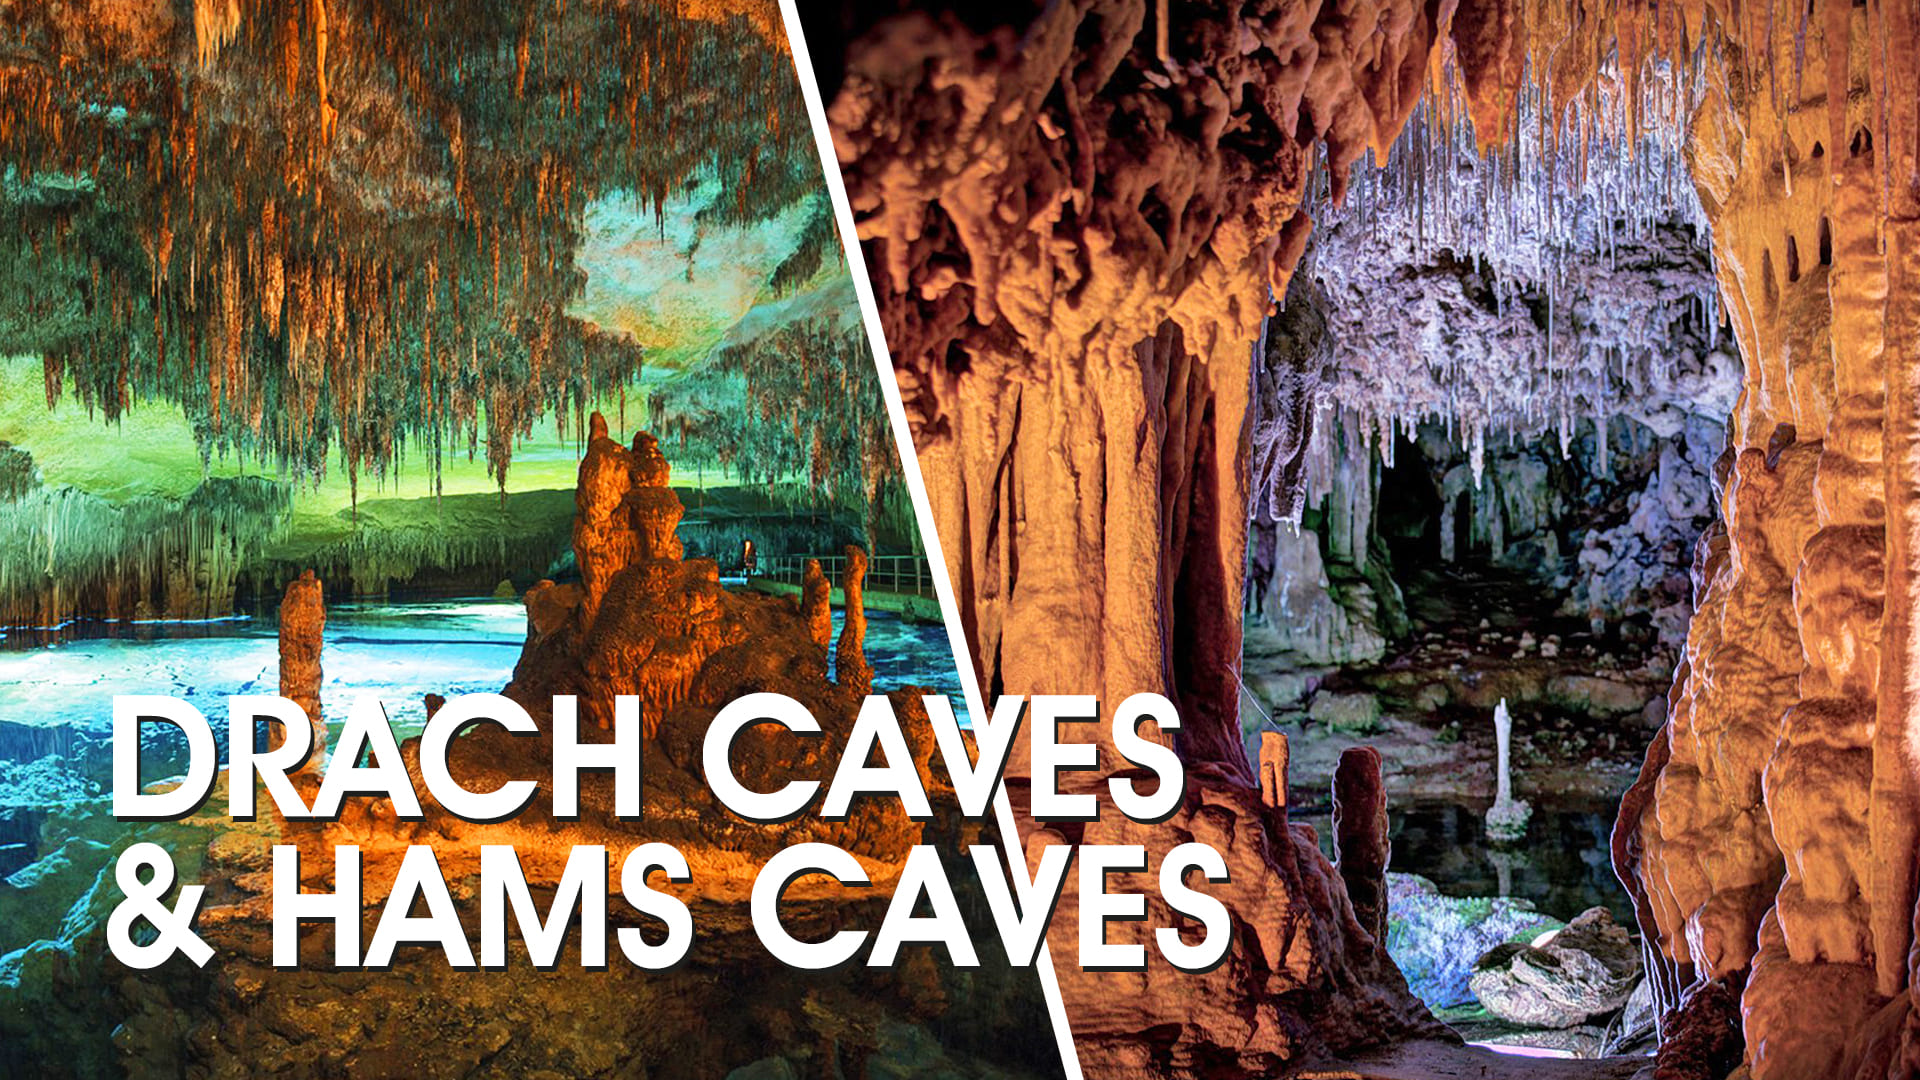 Drach caves & Hams caves full day